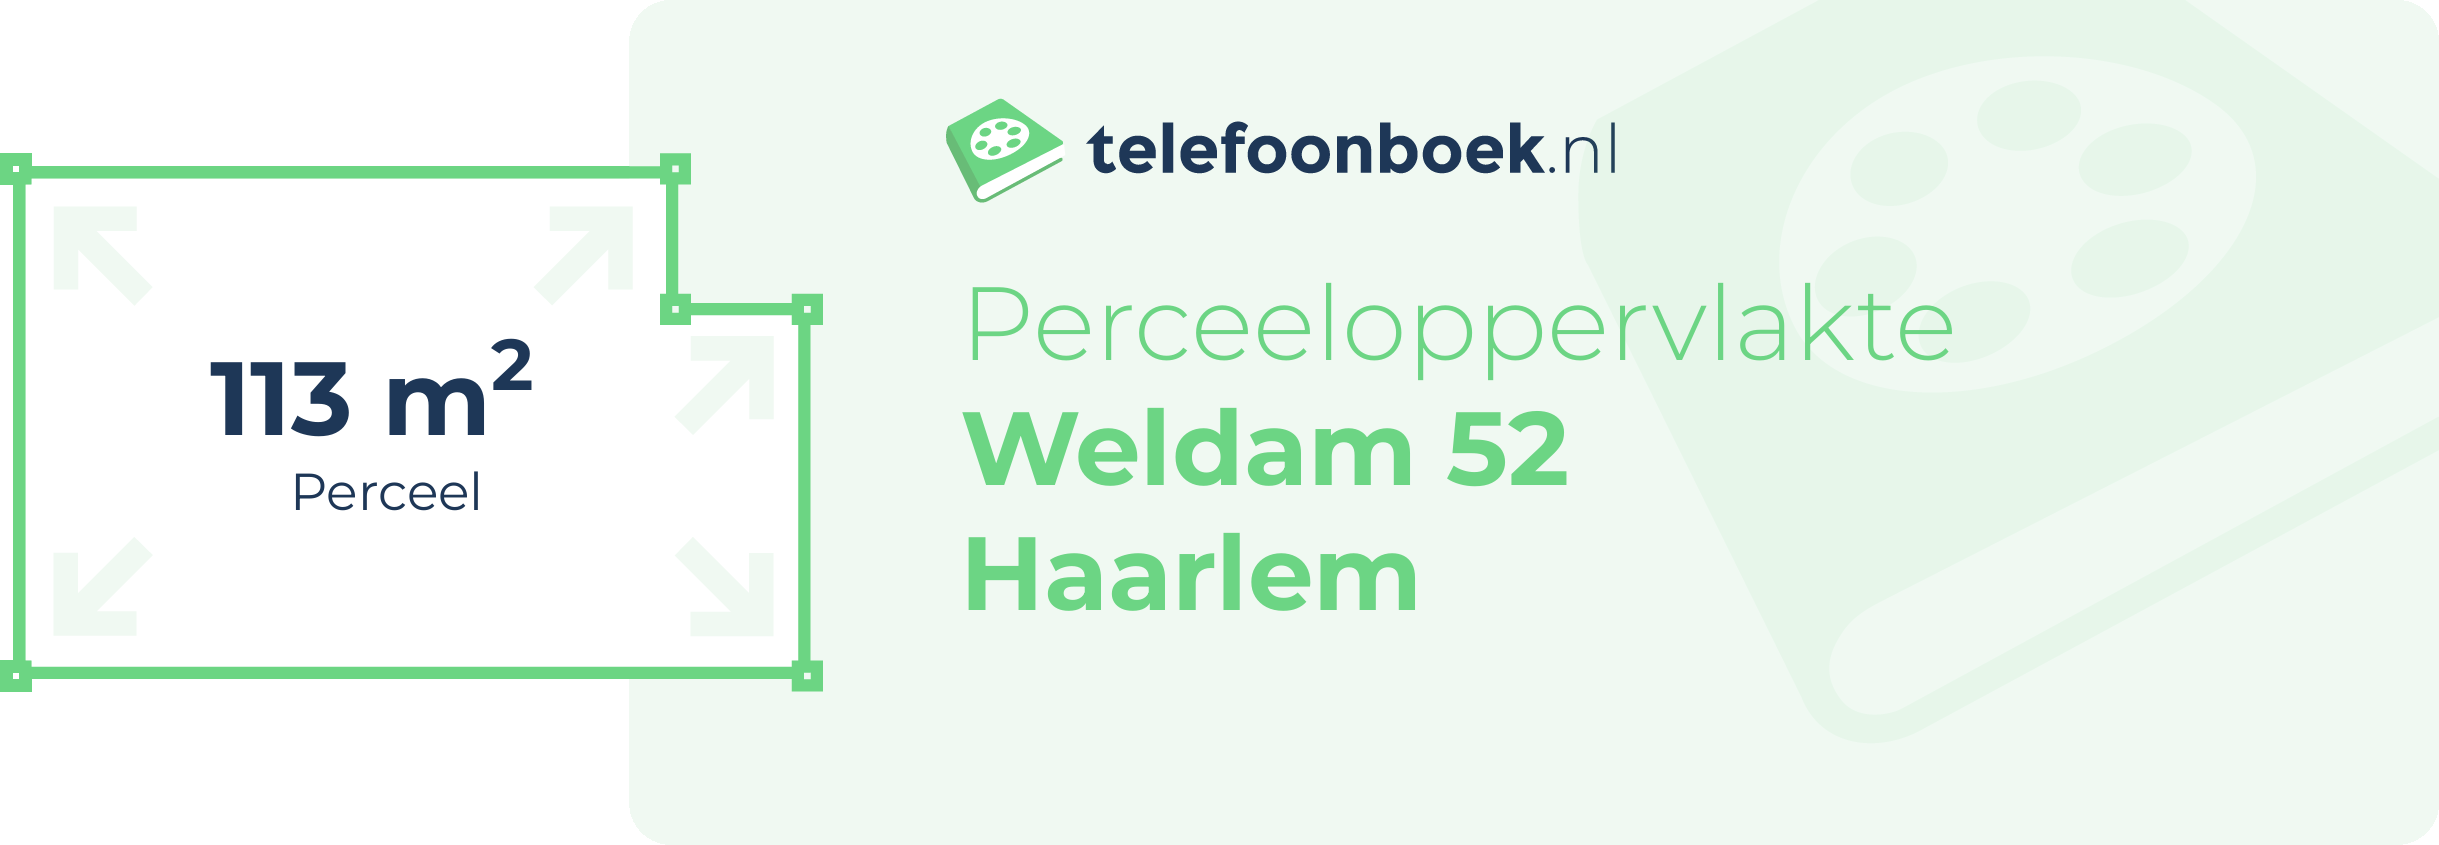 Perceeloppervlakte Weldam 52 Haarlem